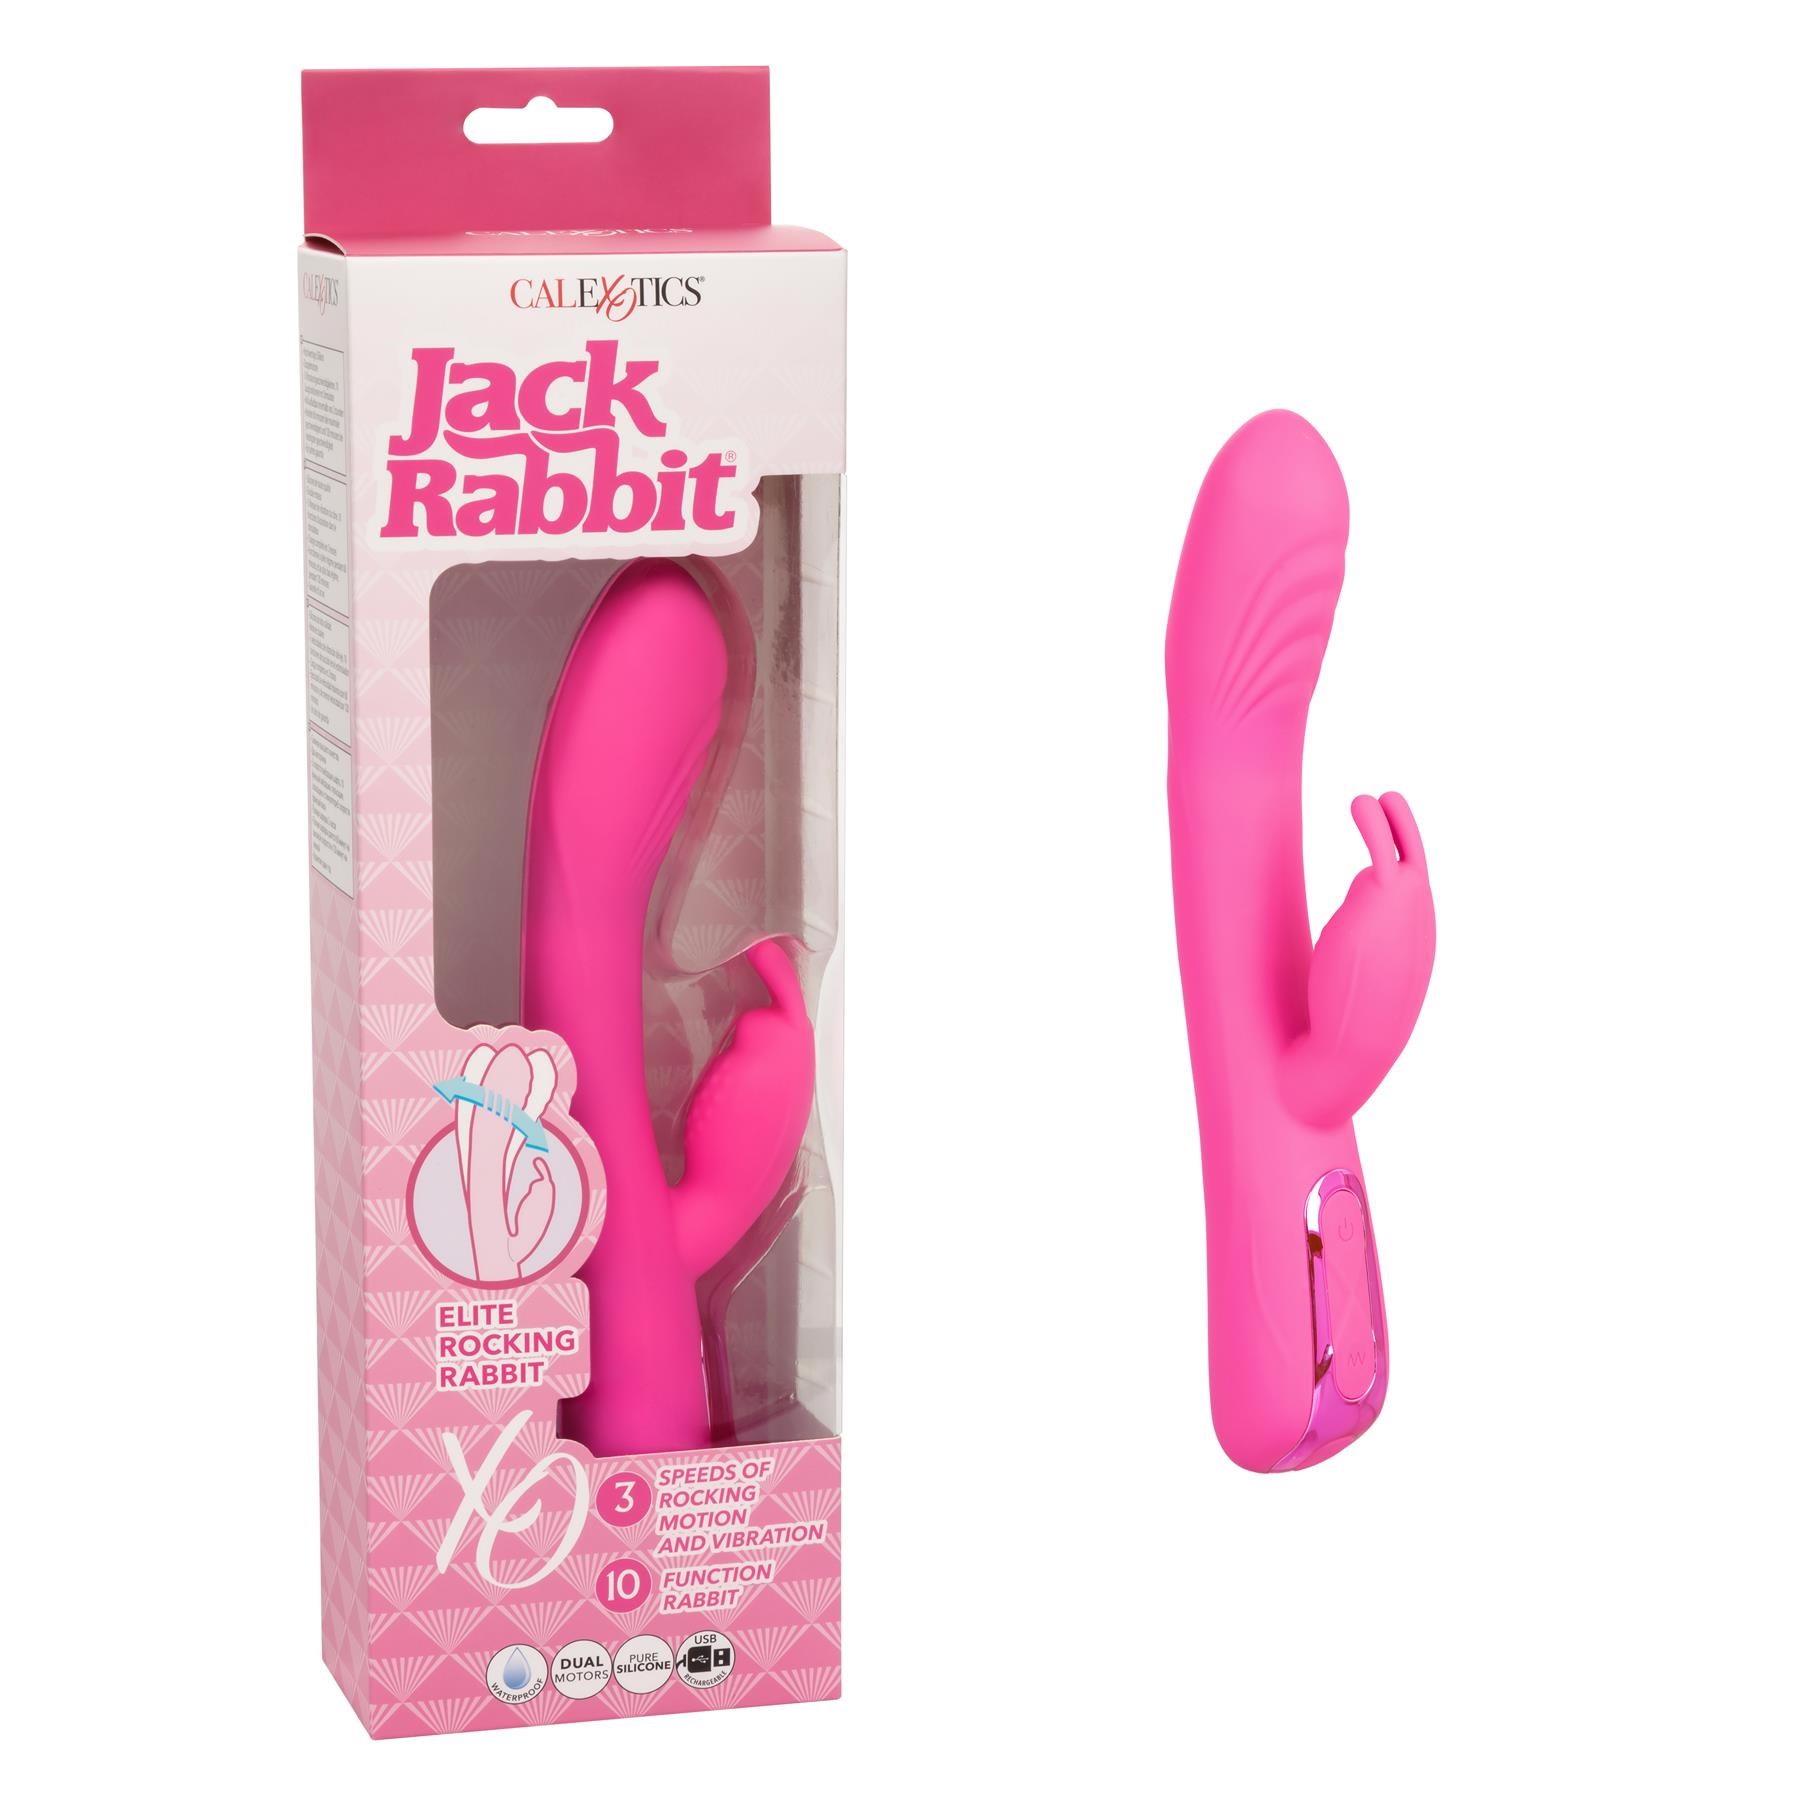 Jack Rabbit Elite Rocking Rabbit- Product and Packaging